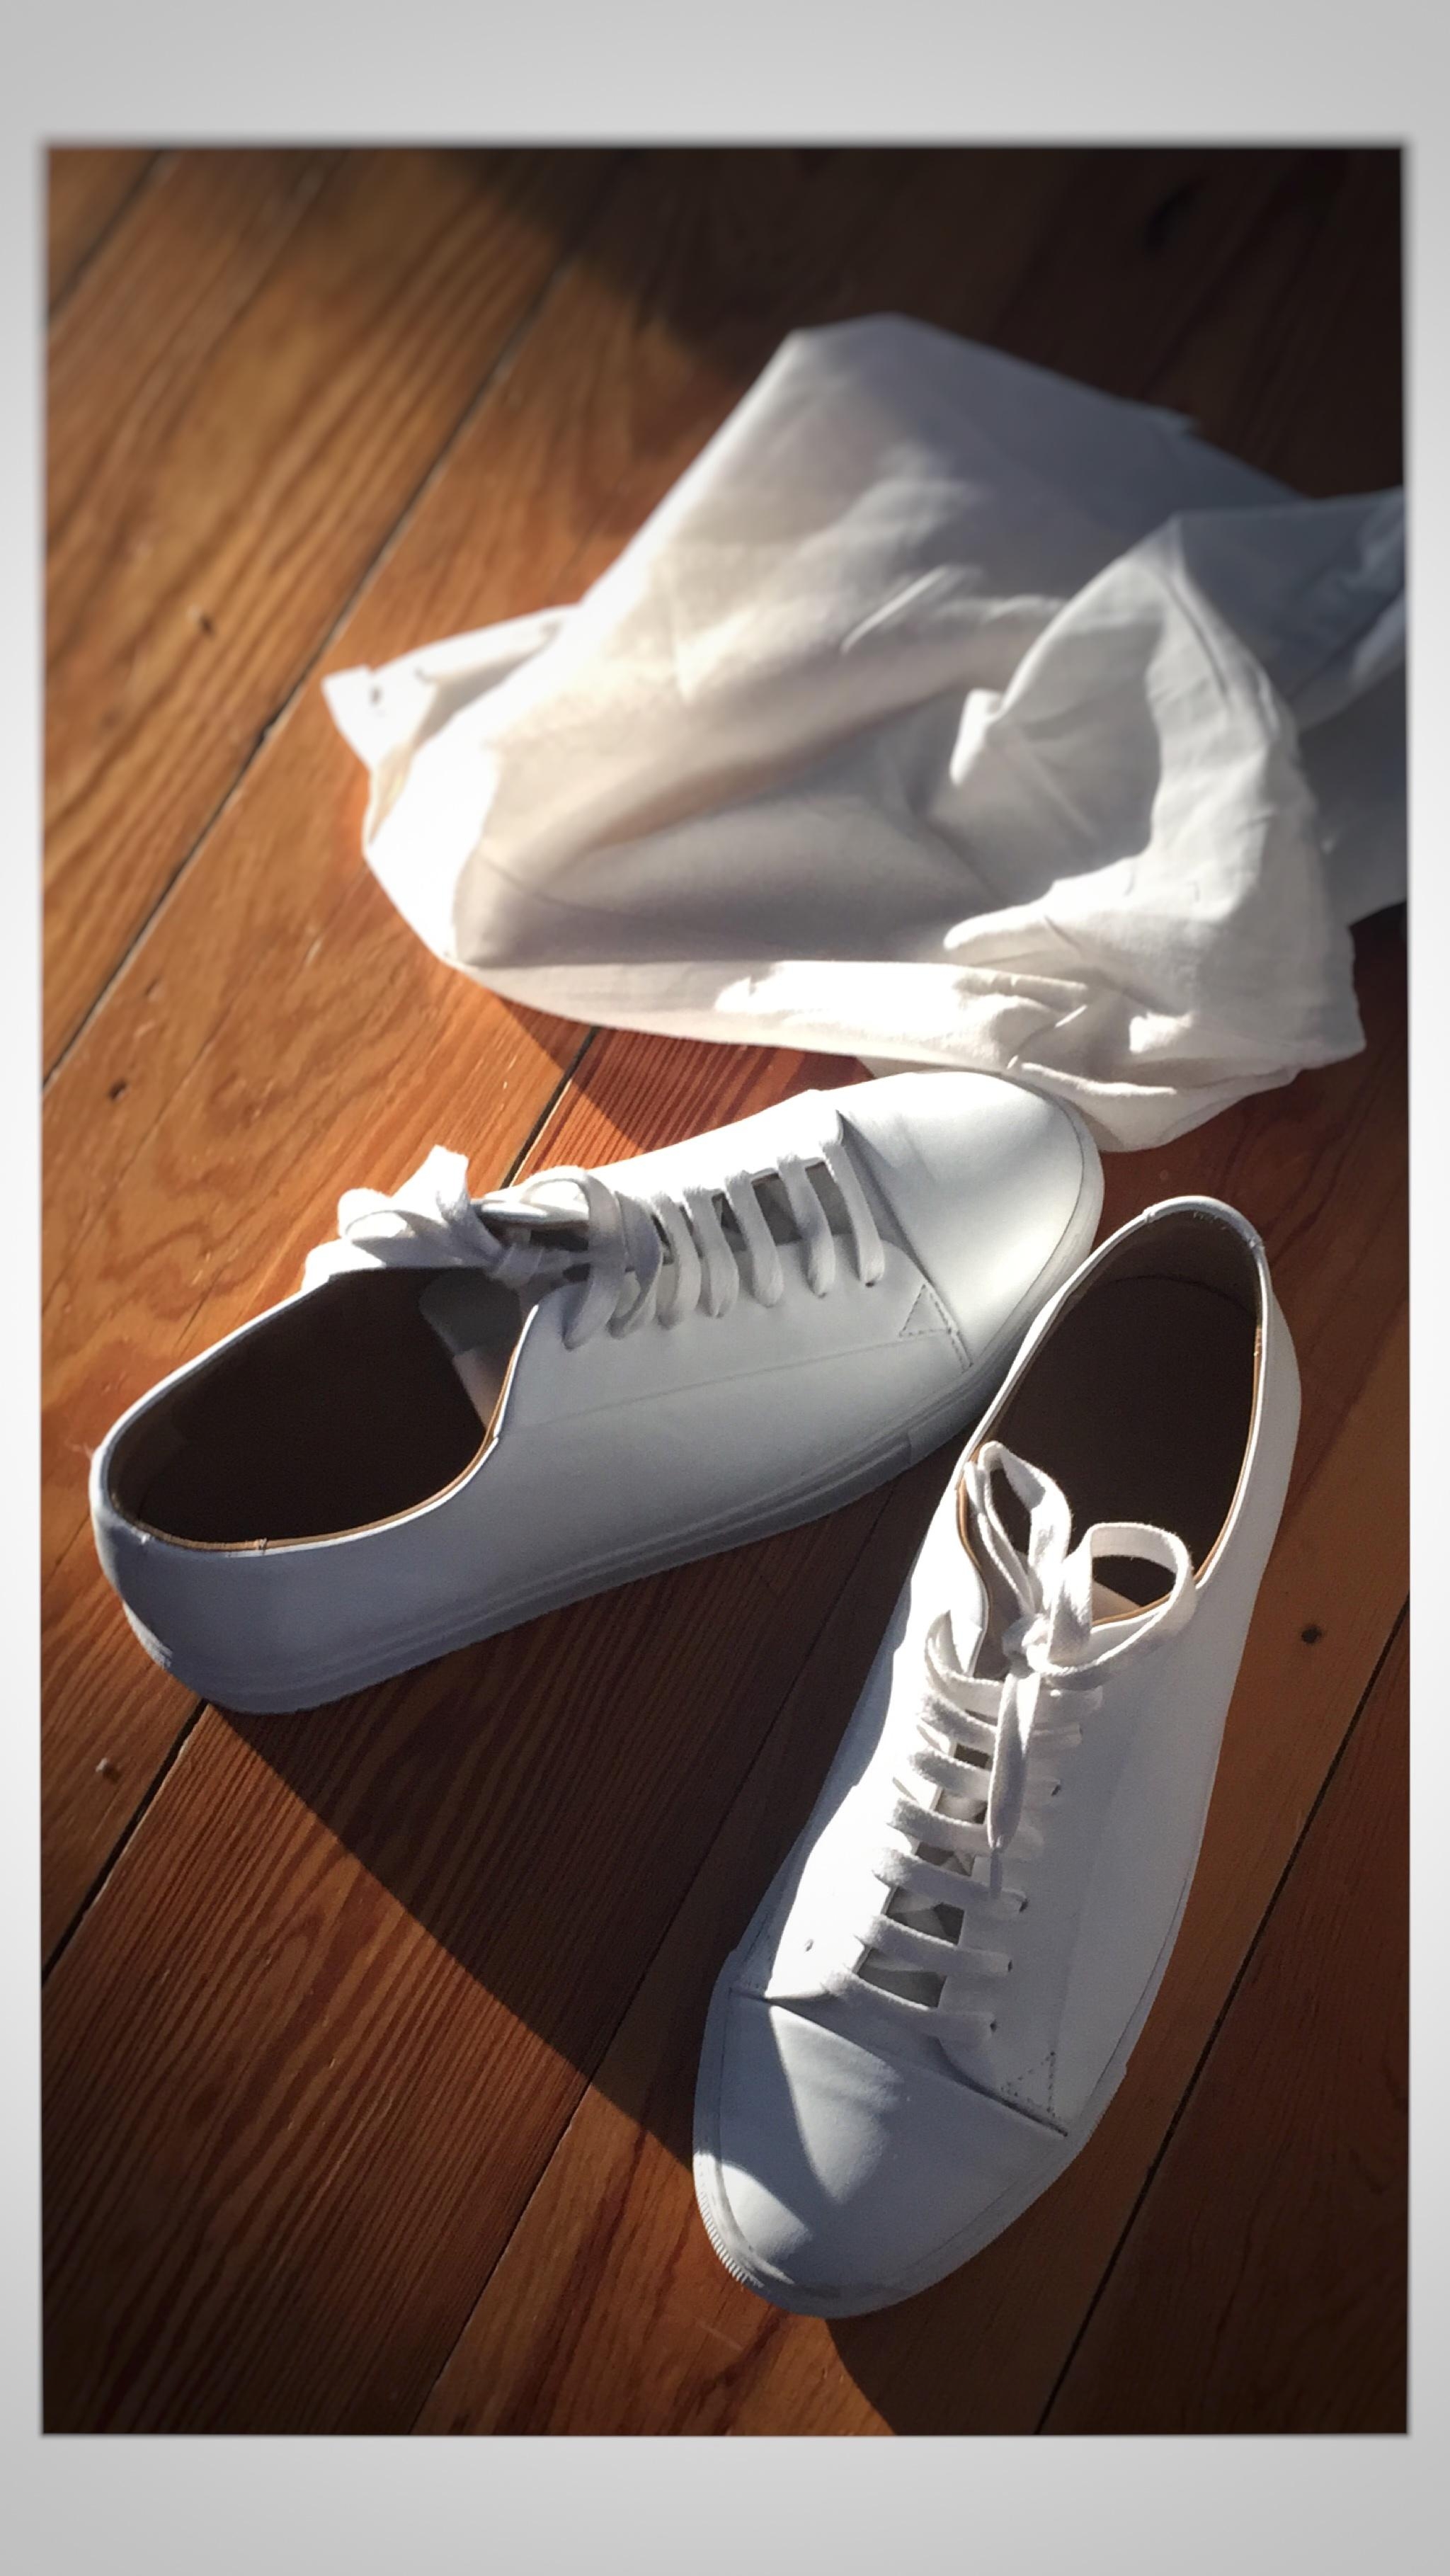 Whitest shoes alive.
#sneaker #sneakerlove #fashion #streetware #cos